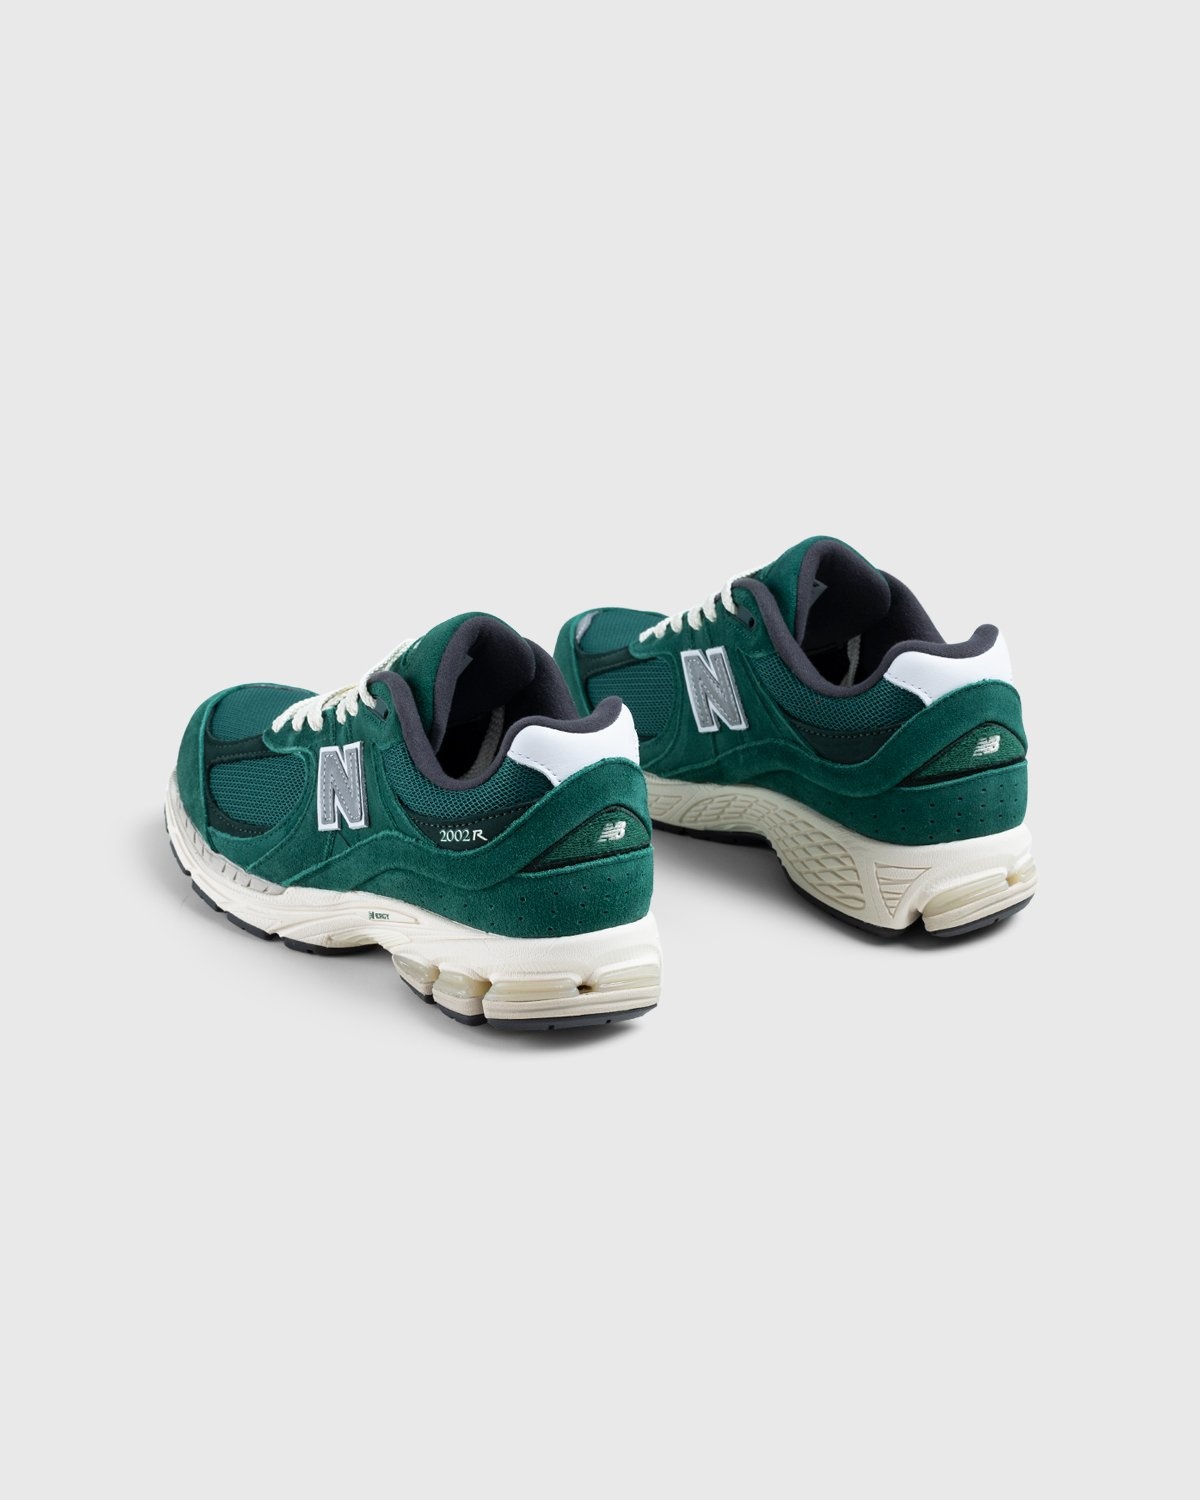 New Balance – M2002RHB Nightwatch Green/Black Emerald - Low Top Sneakers - Green - Image 4